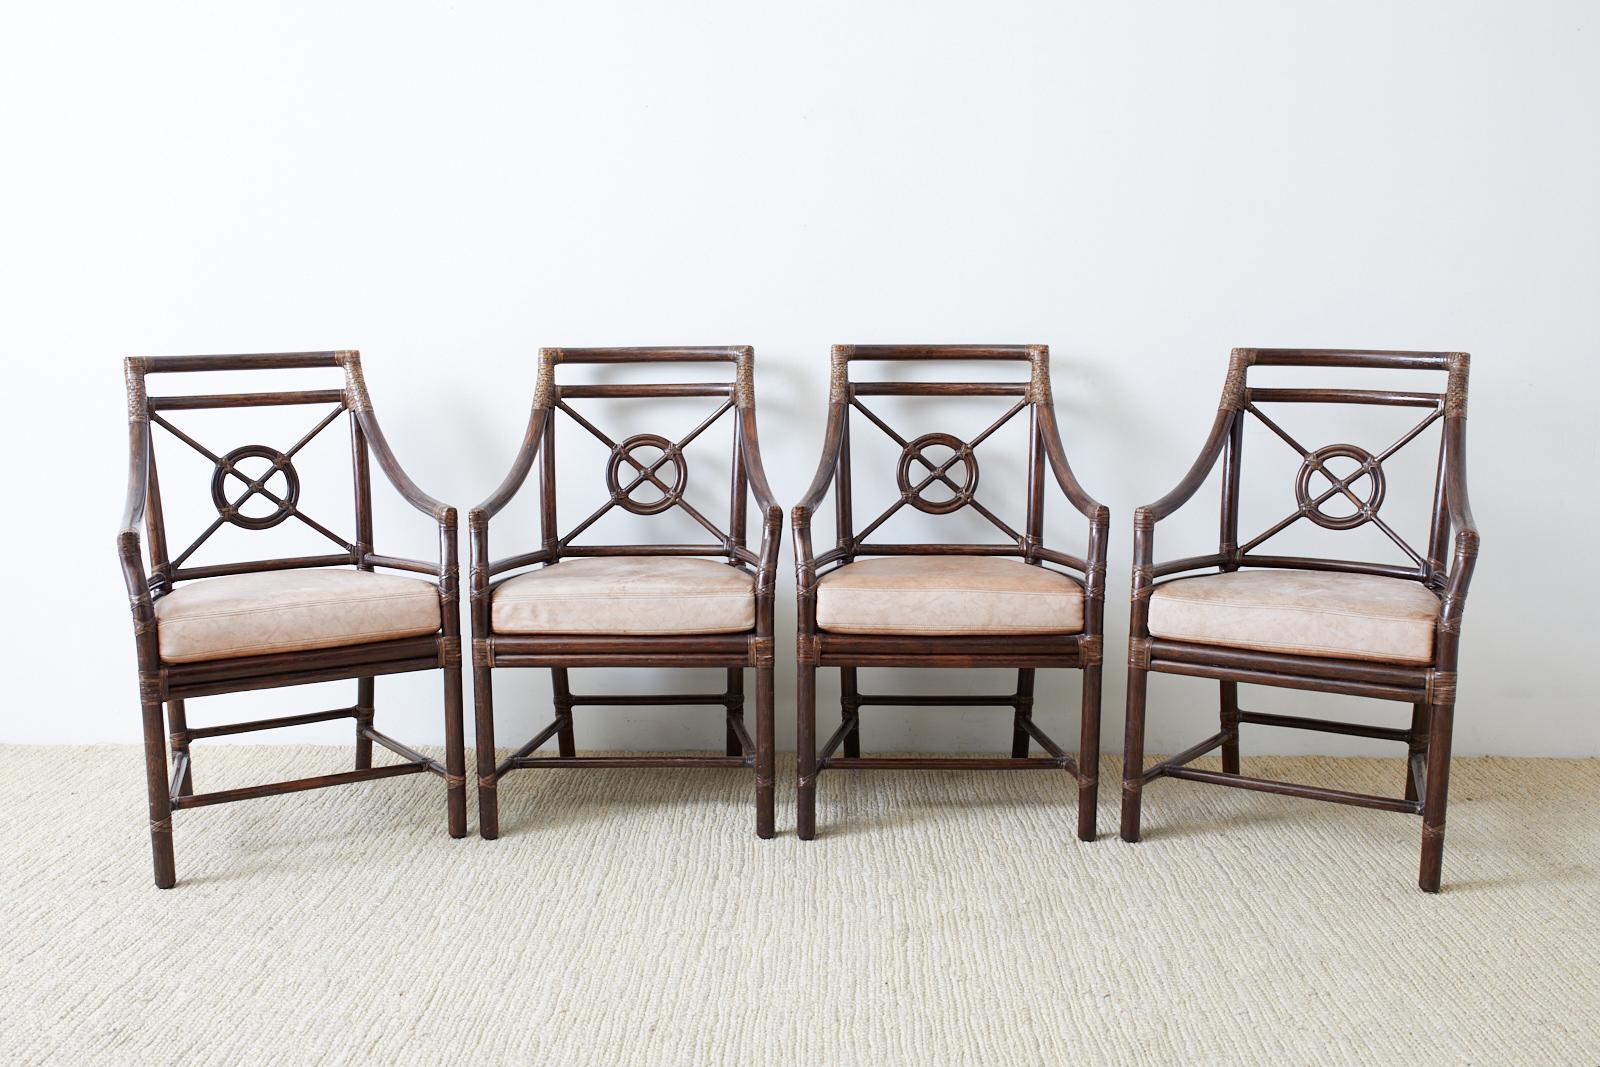 rattan dining chairs target -china -b2b -forum -blog -wikipedia -.cn -.gov -alibaba